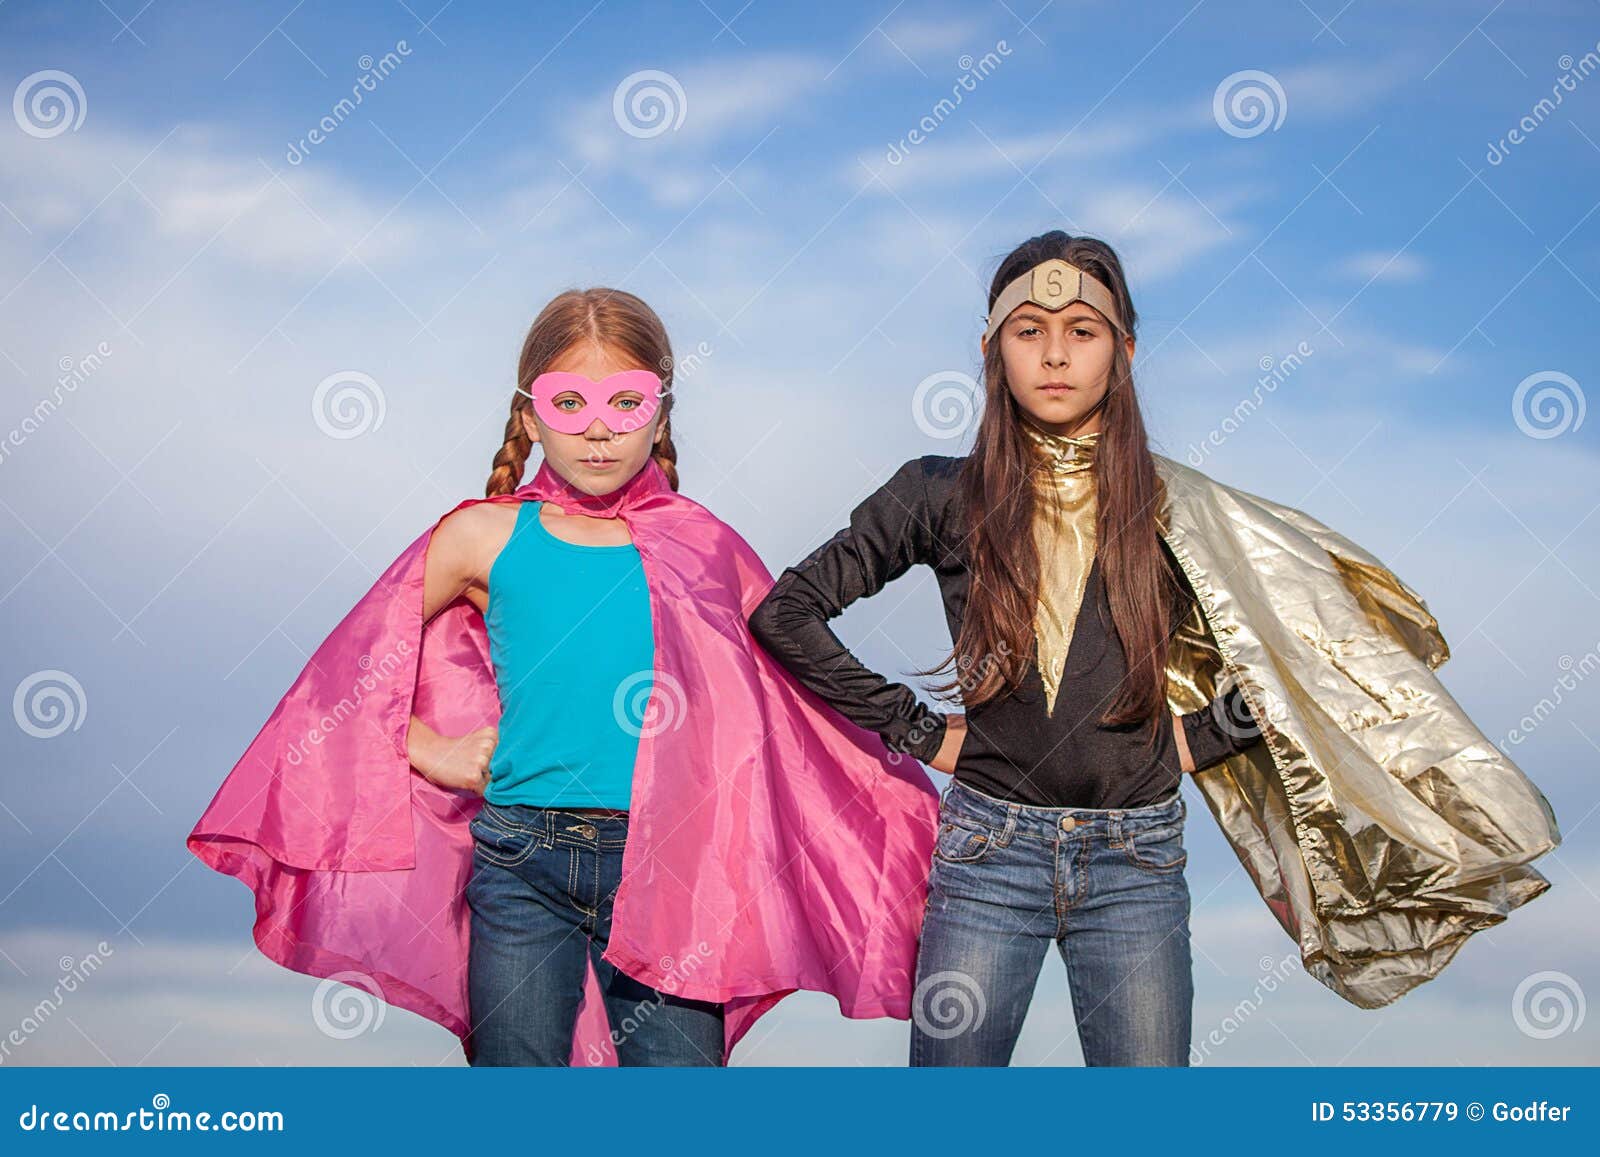 girl power, super heroes